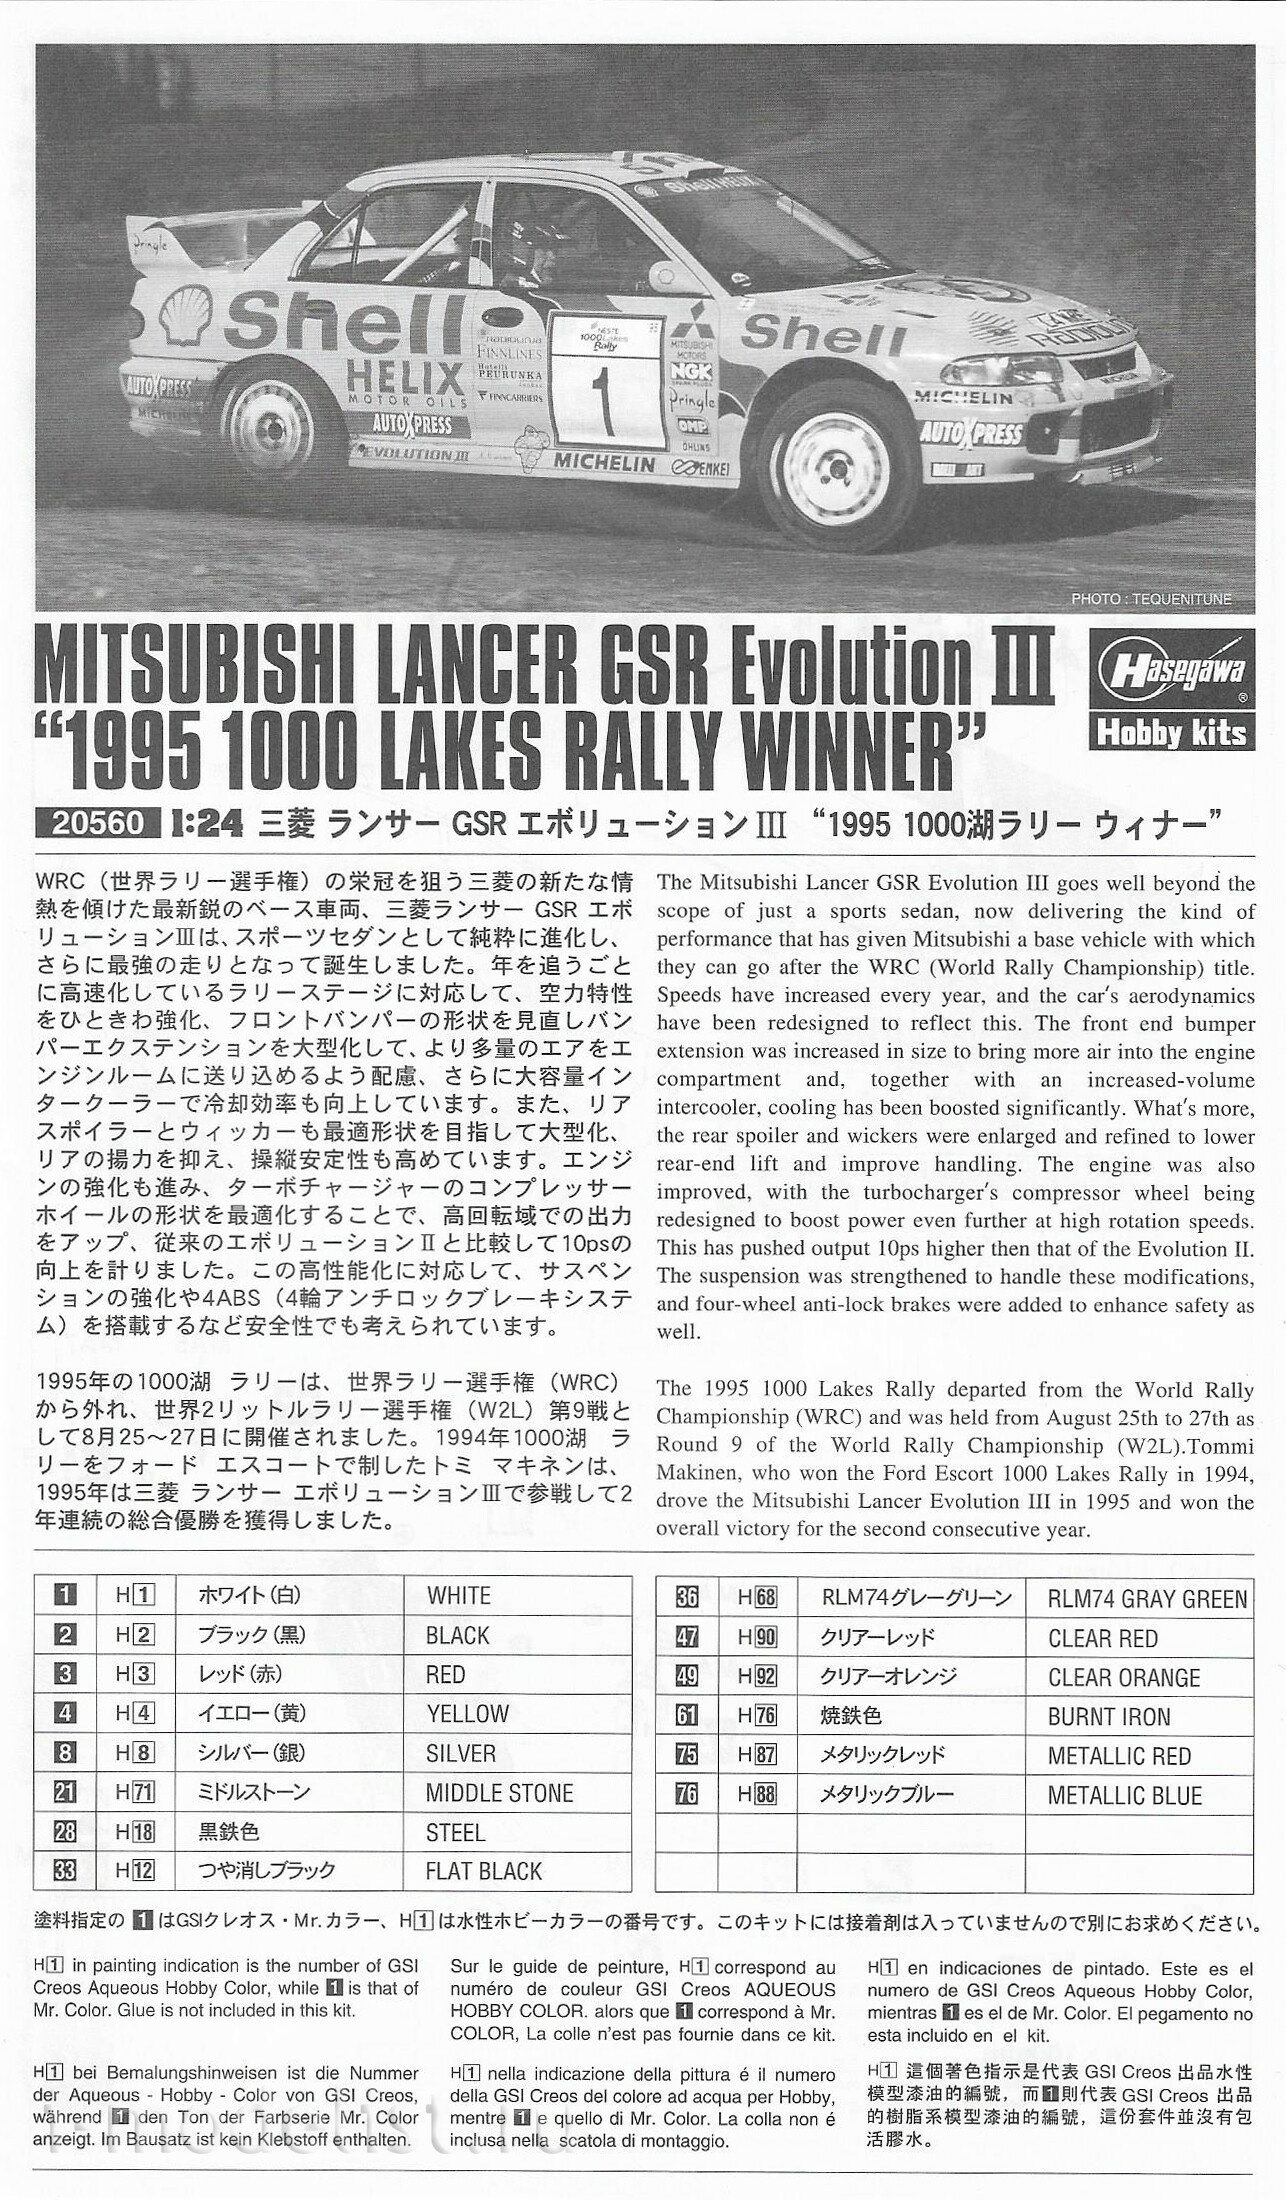 20560 Hasegawa 1/24 Автомобиль Mitsubishi Lancer GSR Evolution III